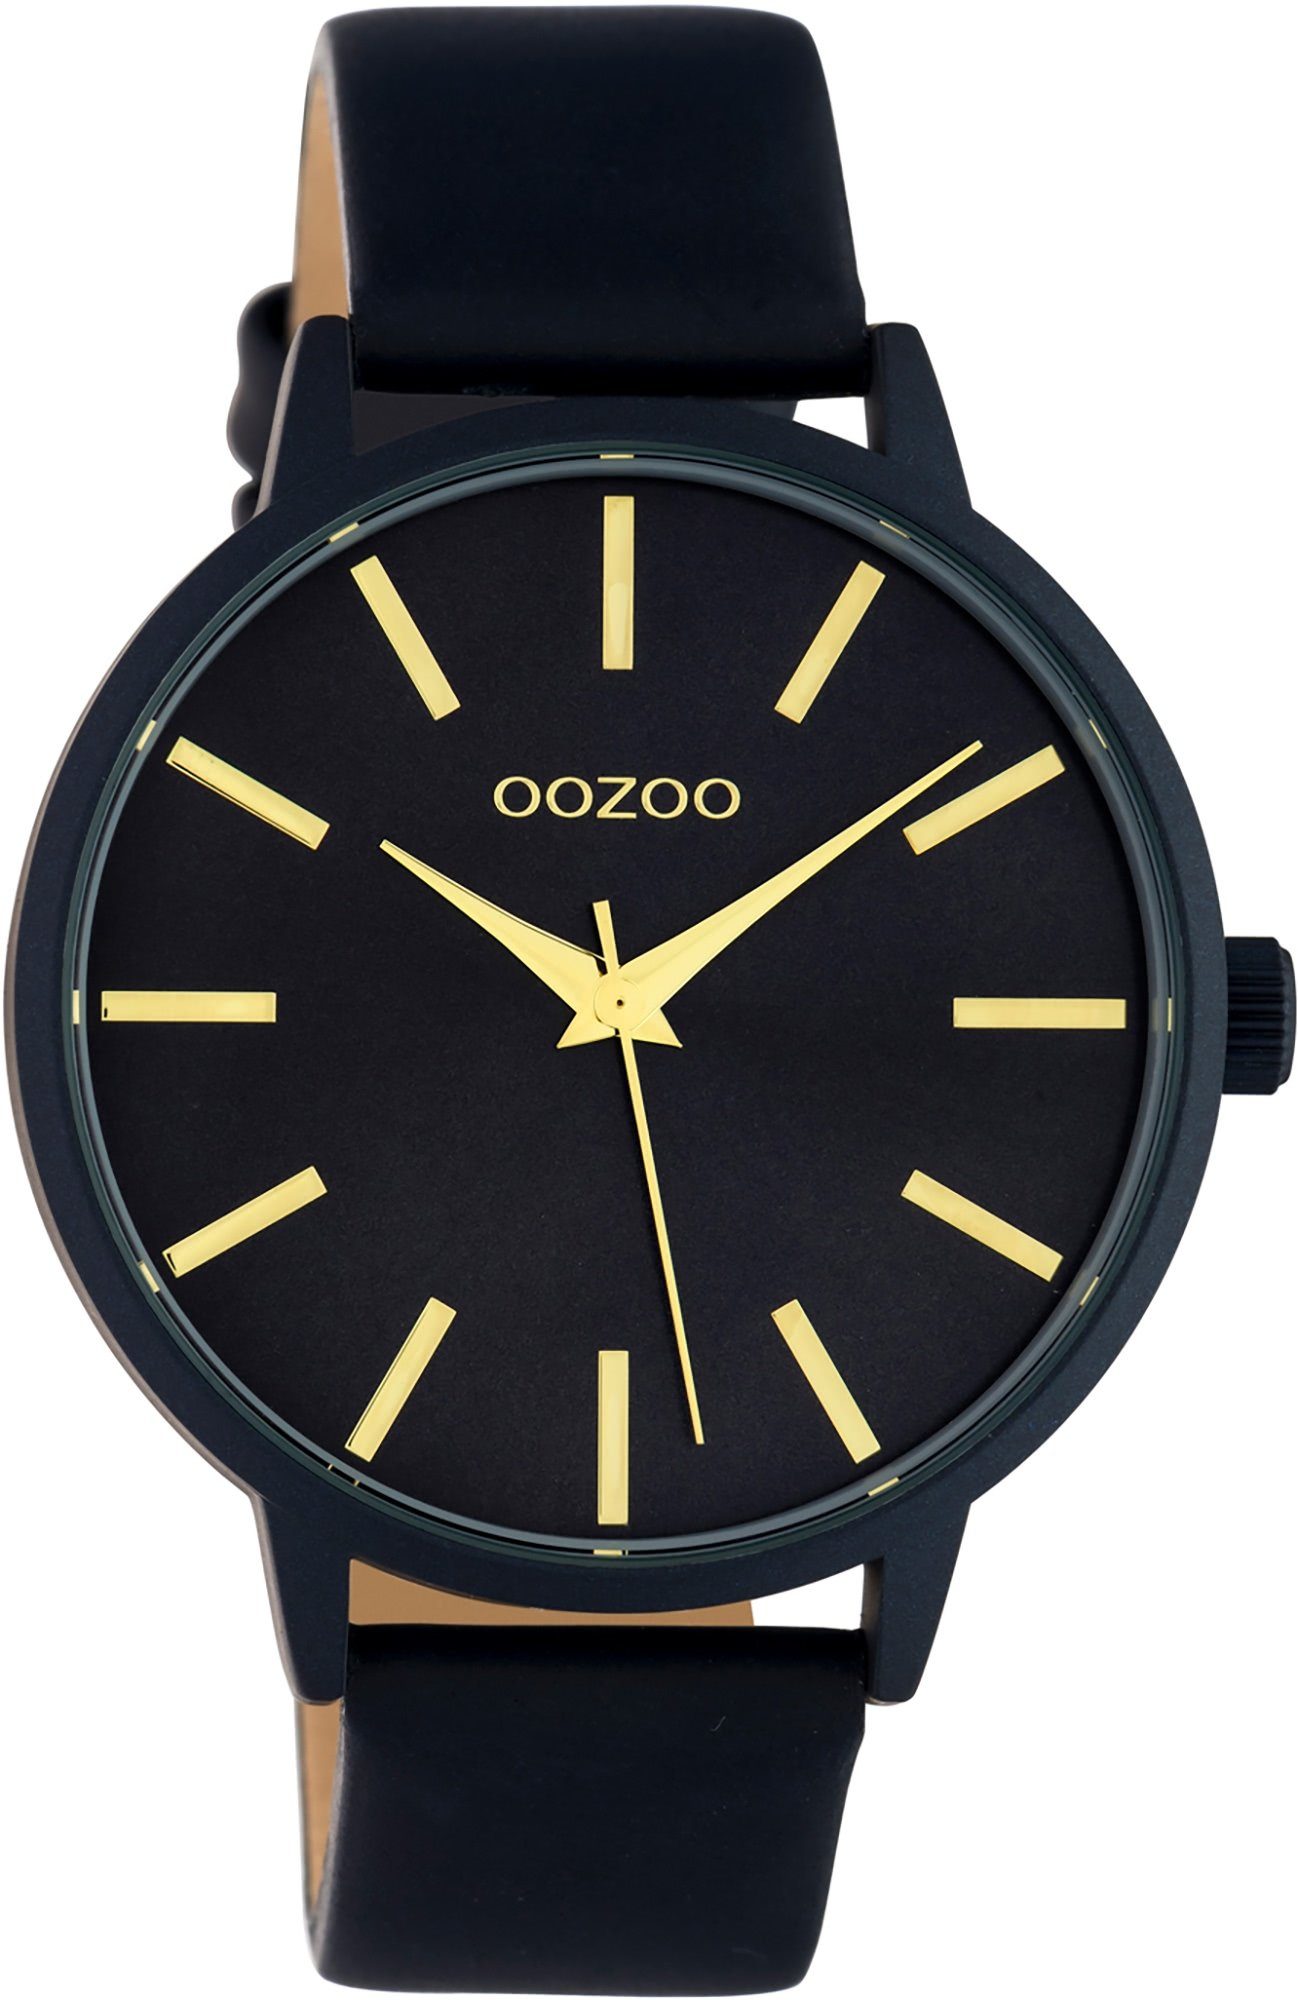 Damenuhr Damen Oozoo Armbanduhr Quarzuhr (ca. Fashion-Style Analog, Lederarmband, OOZOO rund, 42mm) groß dunkelblau